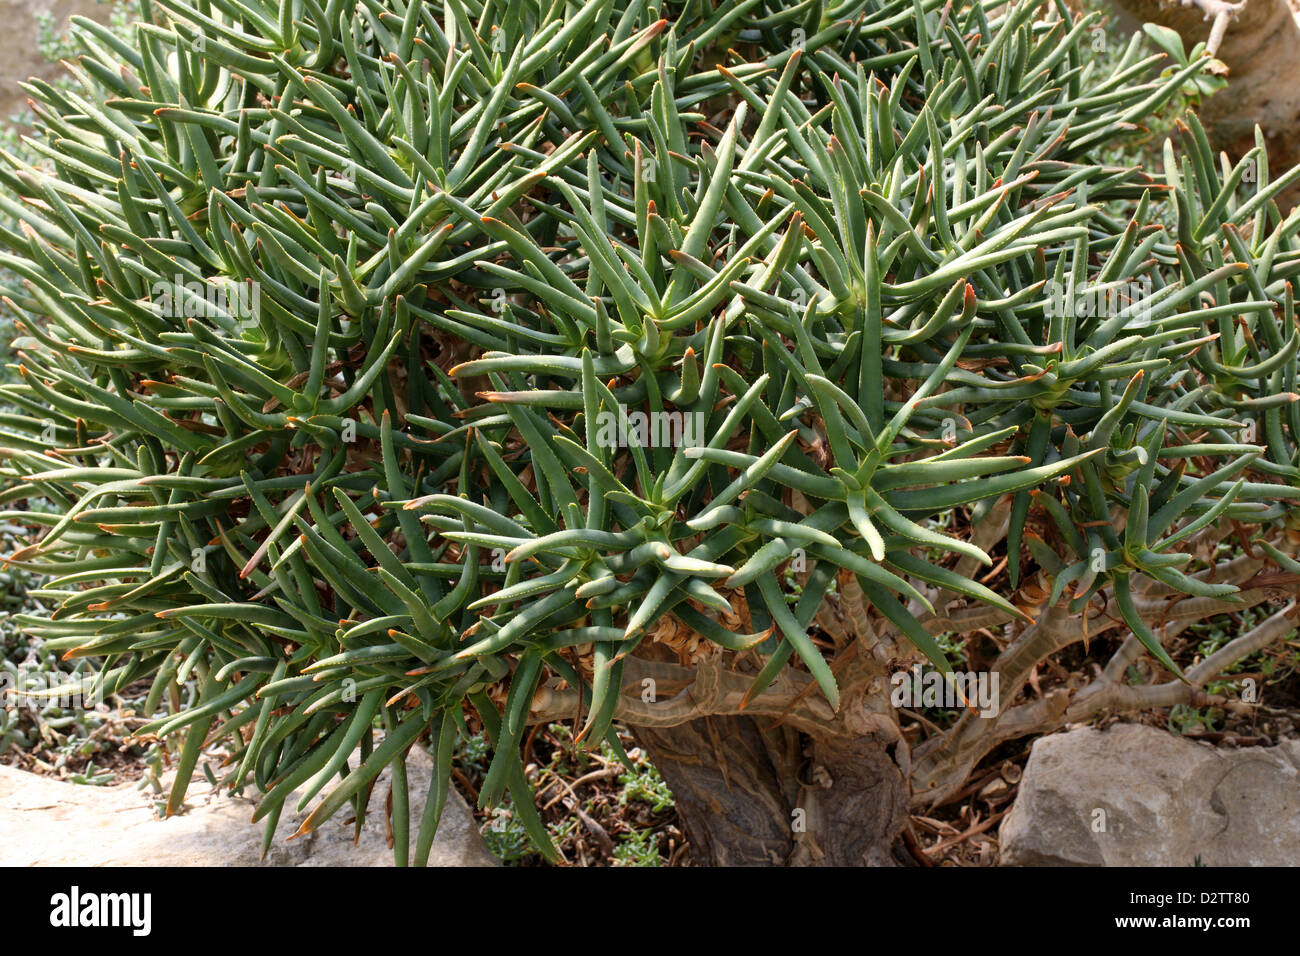 La jeune fille, Quiver Tree Aloe ramosissima, Xanthorrhoeaceae (Aloaceae). L'Afrique du Sud. Syn. Aloe dichotoma var. ramosissima. Banque D'Images